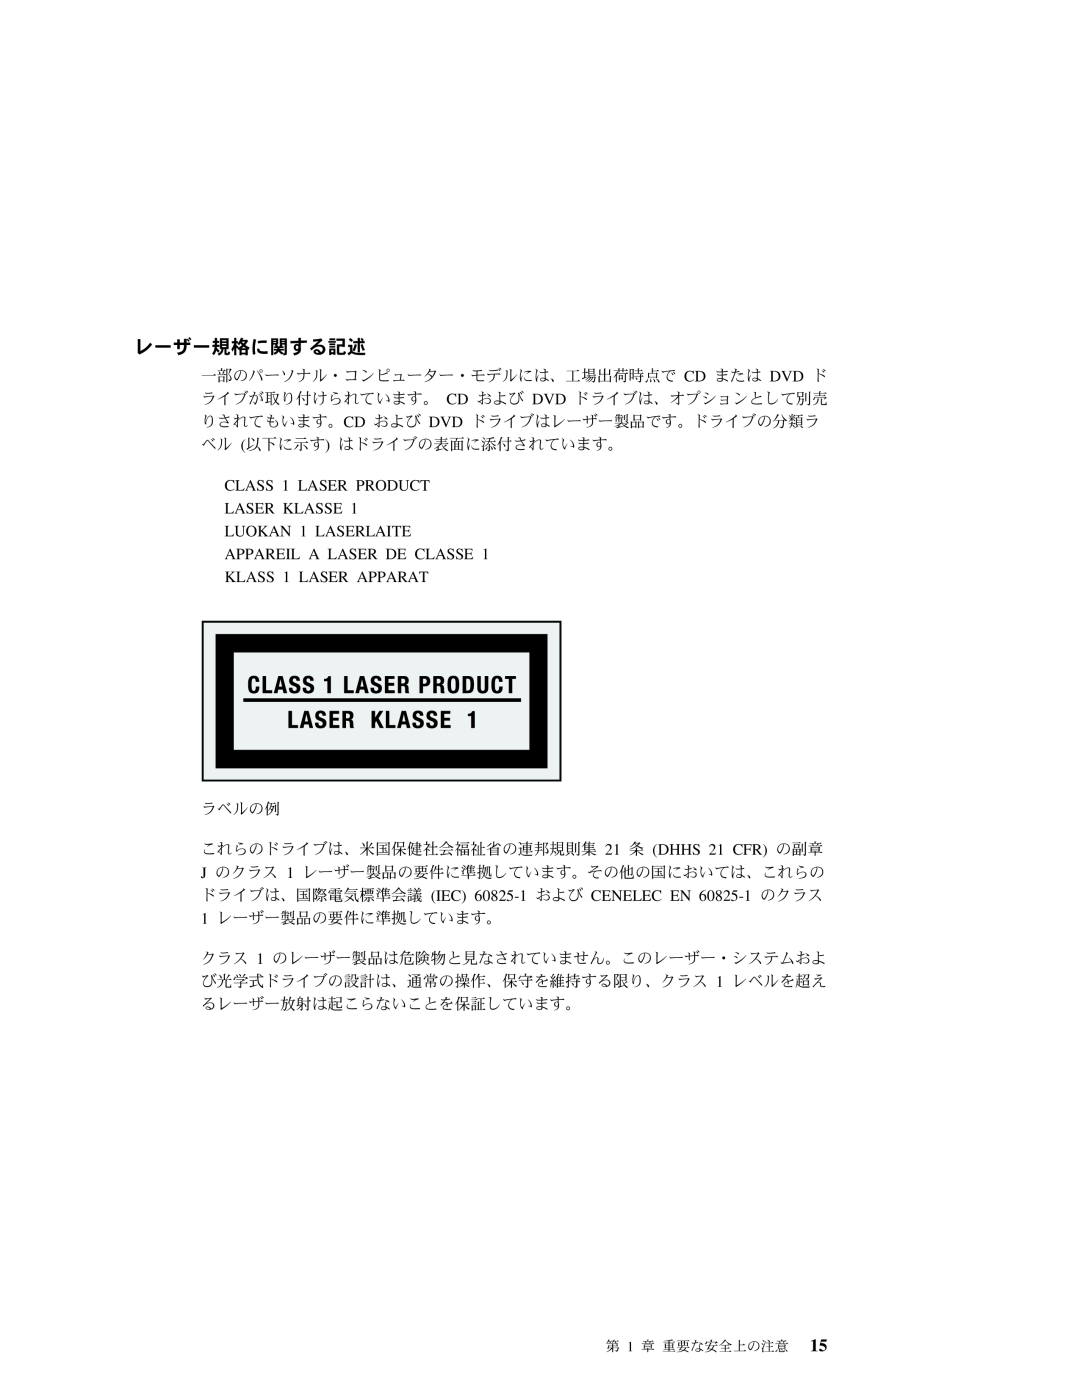 Lenovo 3000 manual レーザー規格に関する記述 